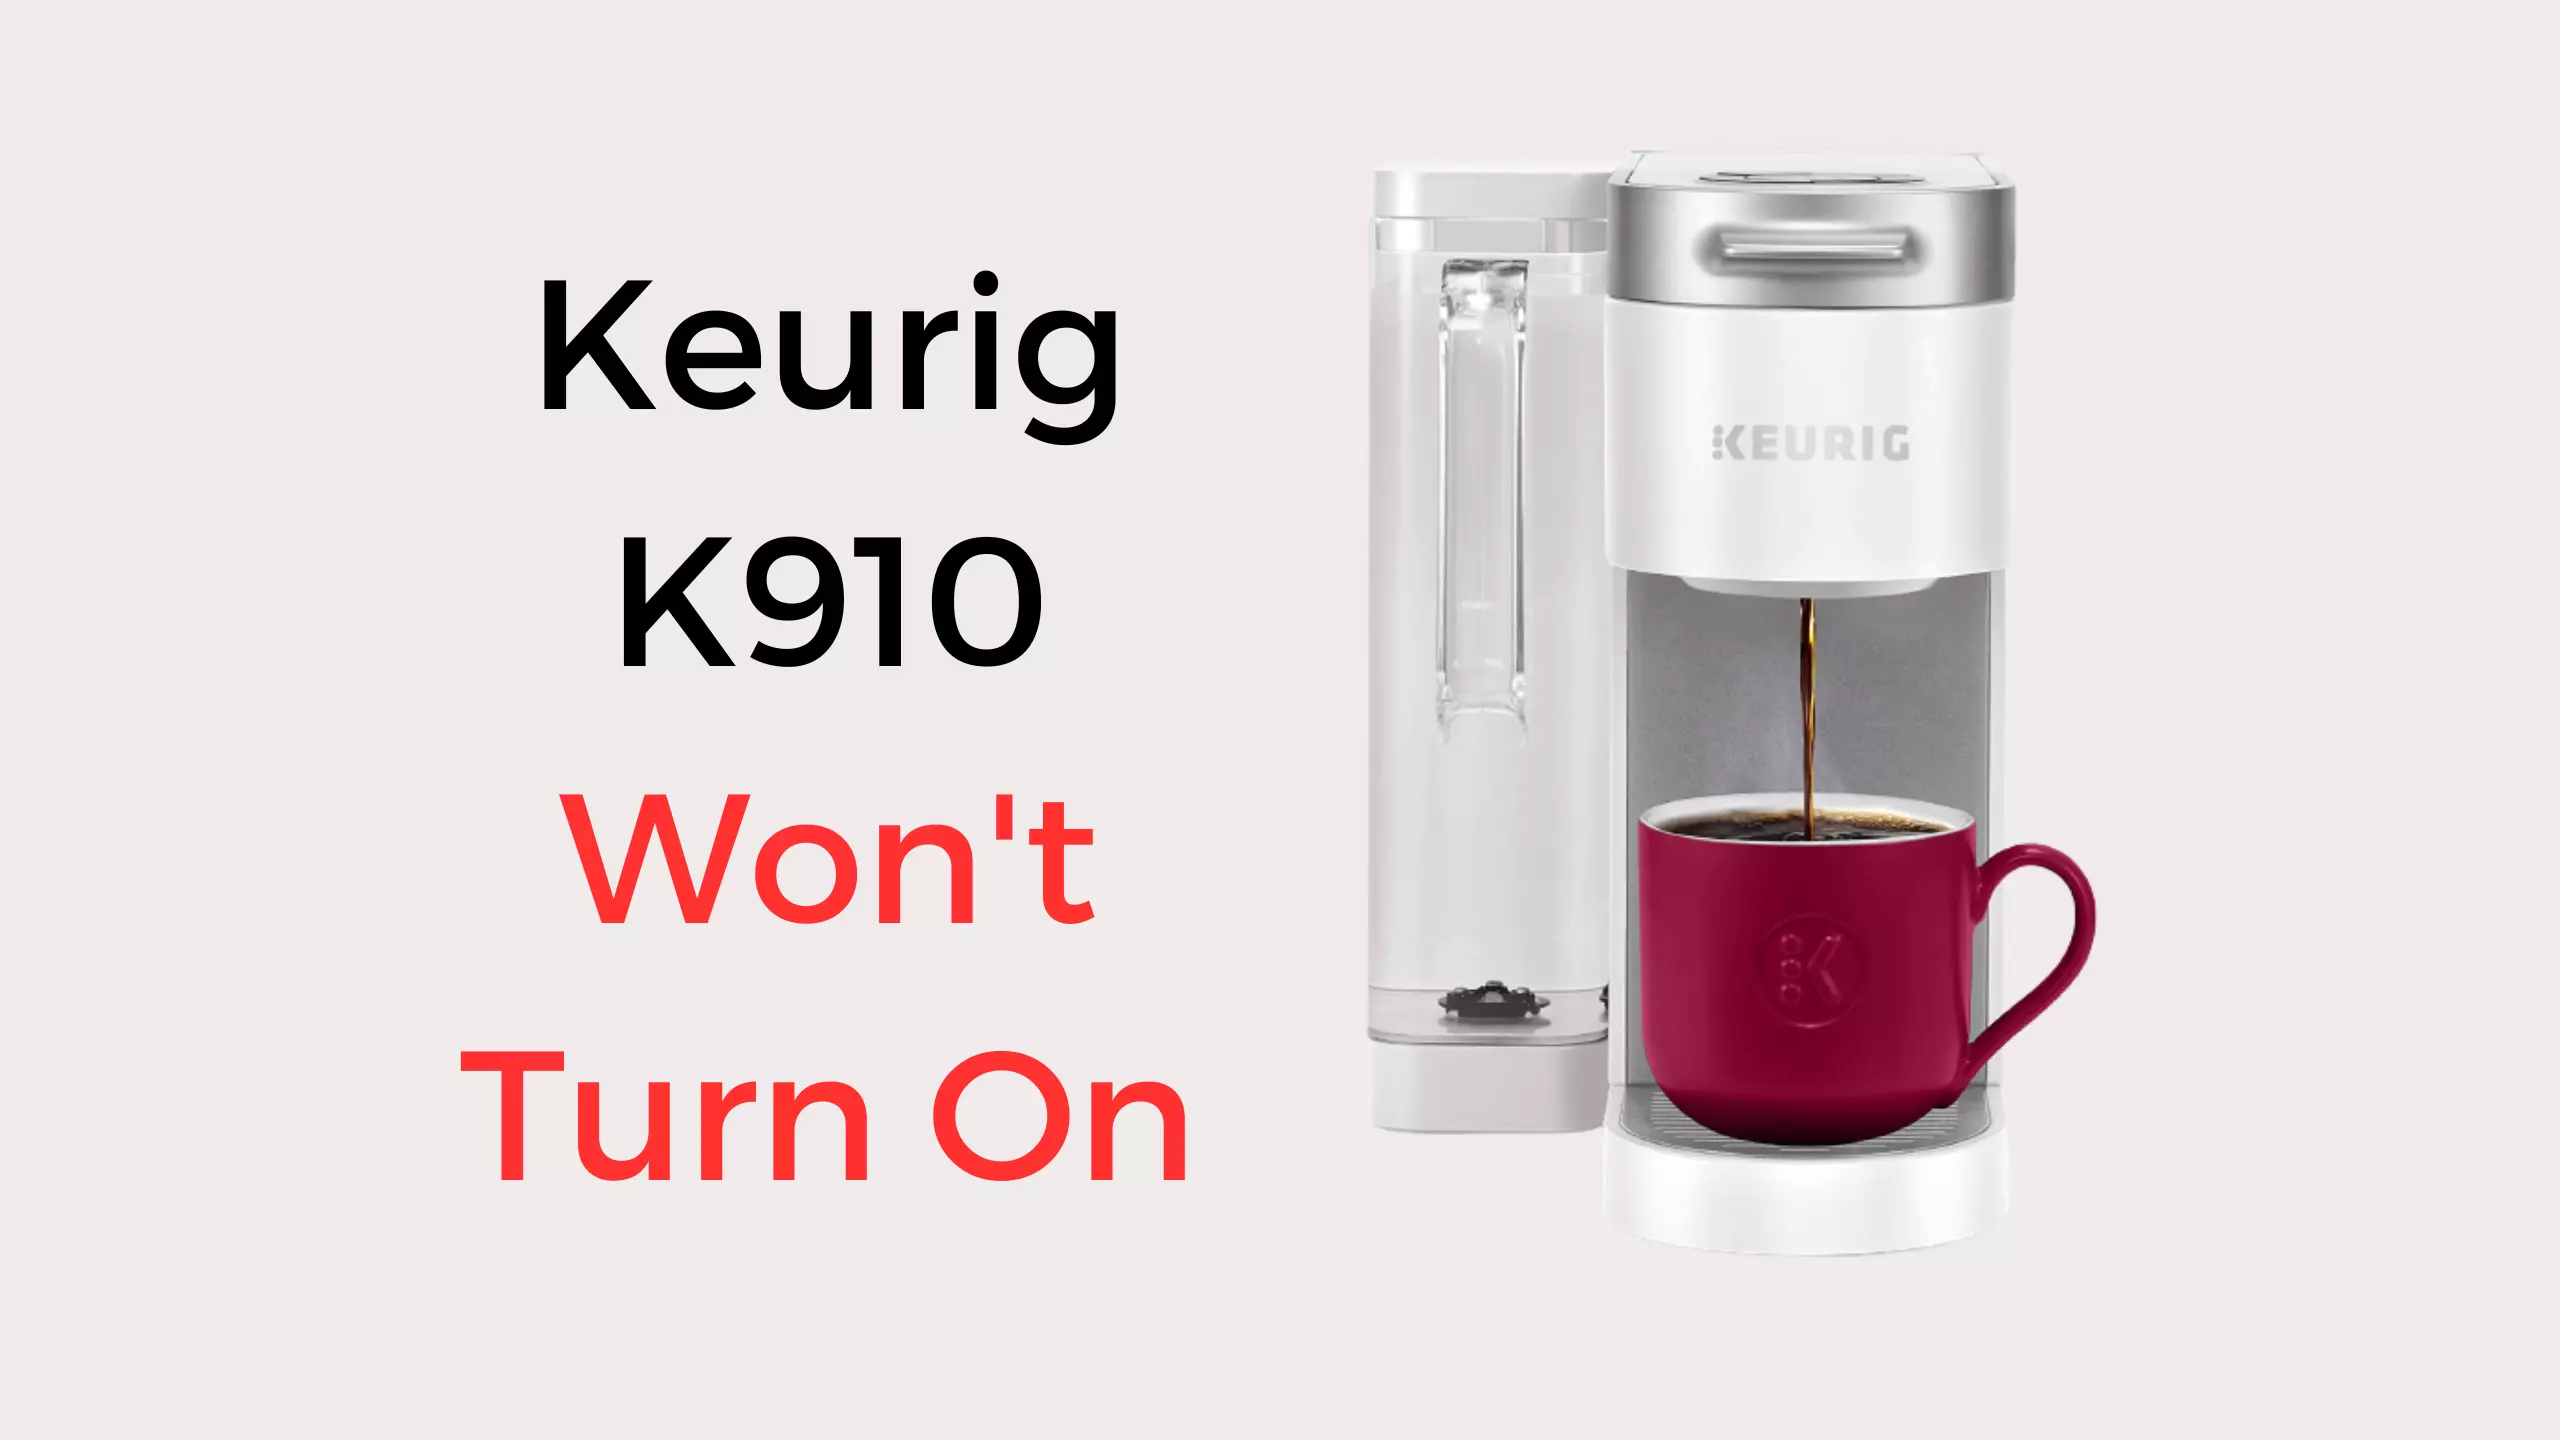 keurig k910 won't turn on